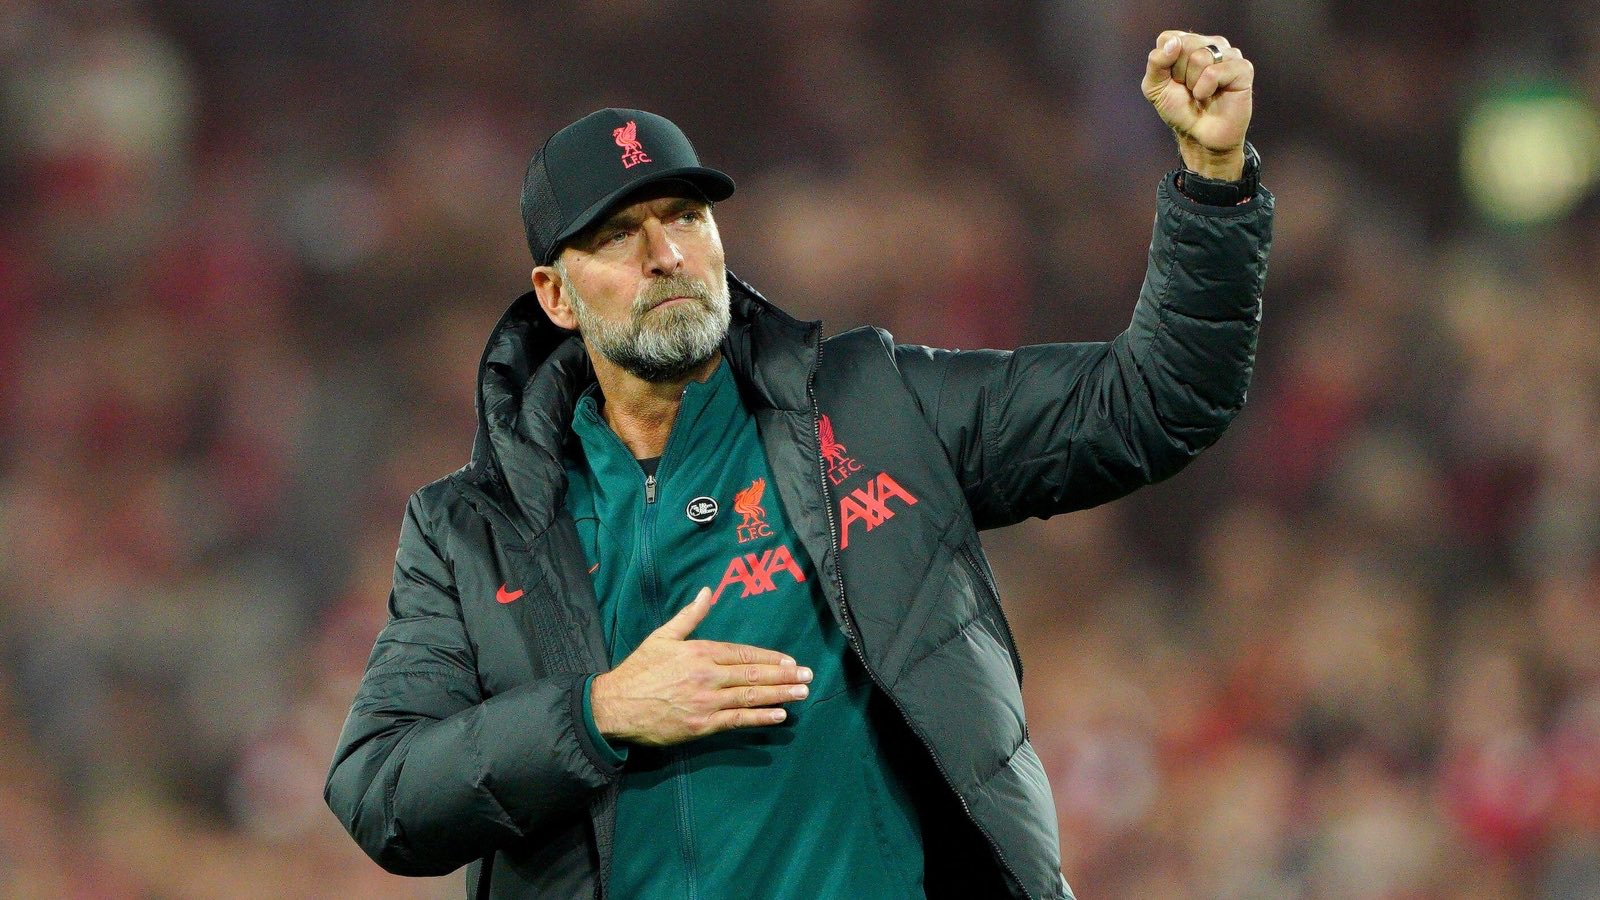 'I have no explanation' after latest Liverpool defeat - Jurgen Klopp